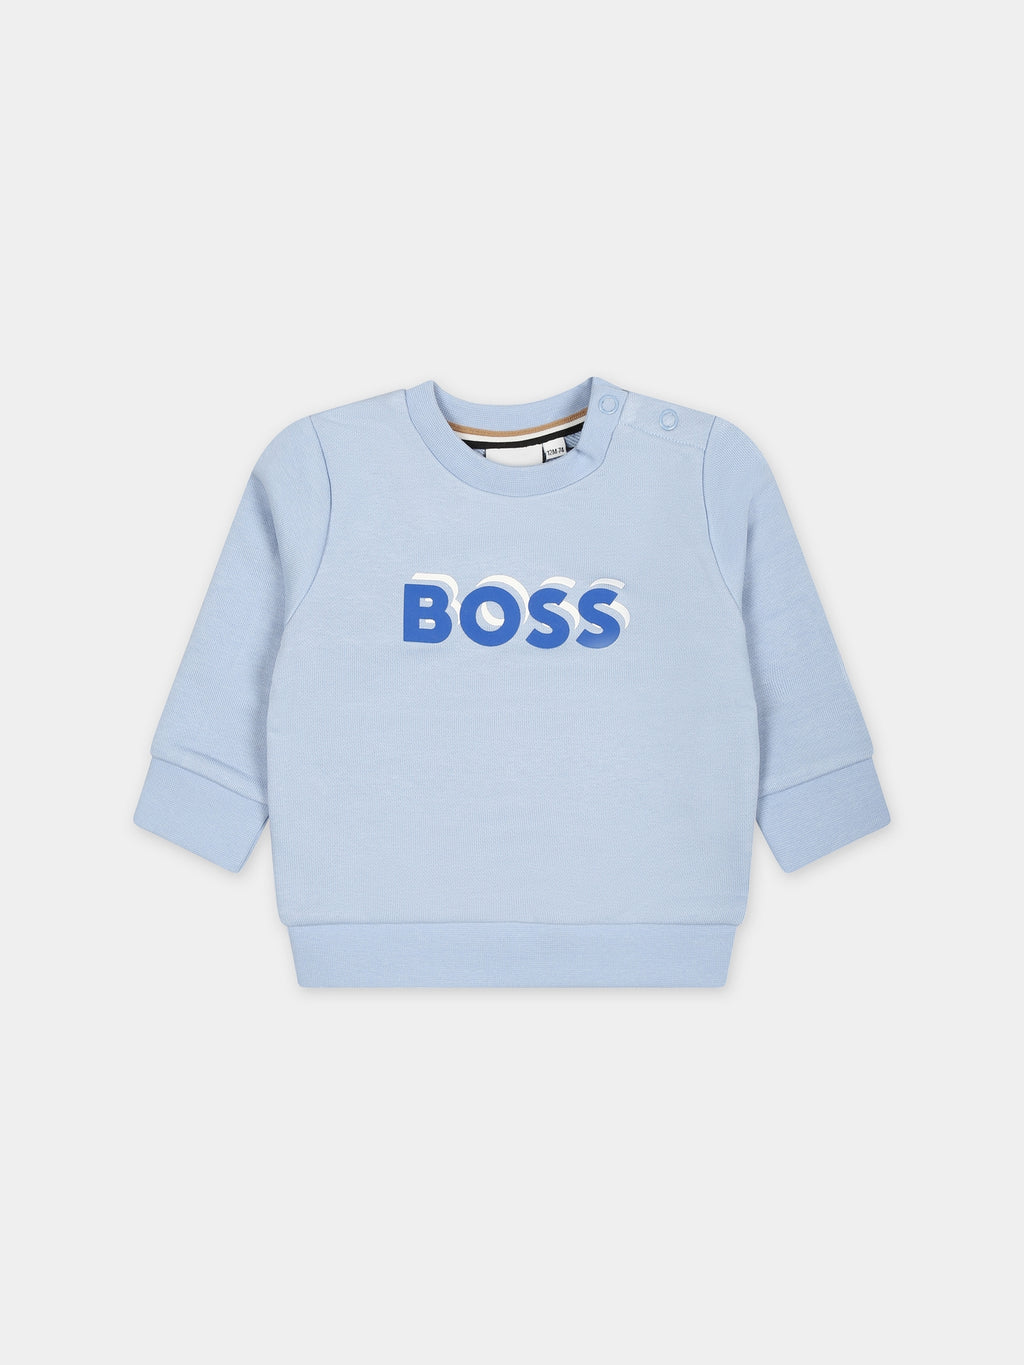 Sweat-shirt bleu clair pour bébé garçon avec logo